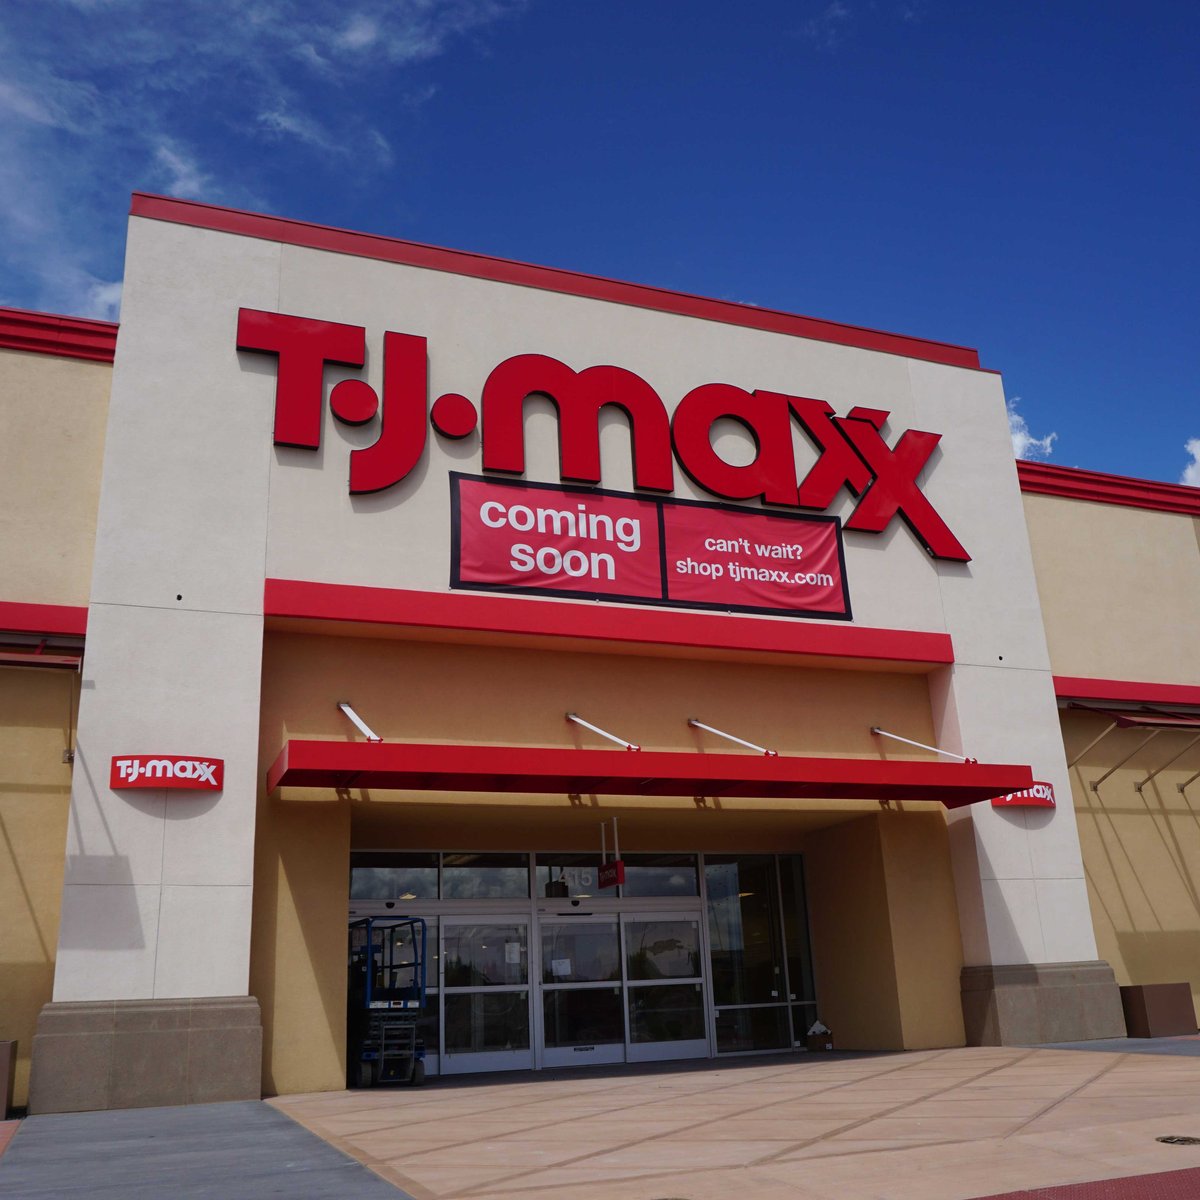 TJ Maxx Vs. Burlington: Which Is a Better Discount Store?